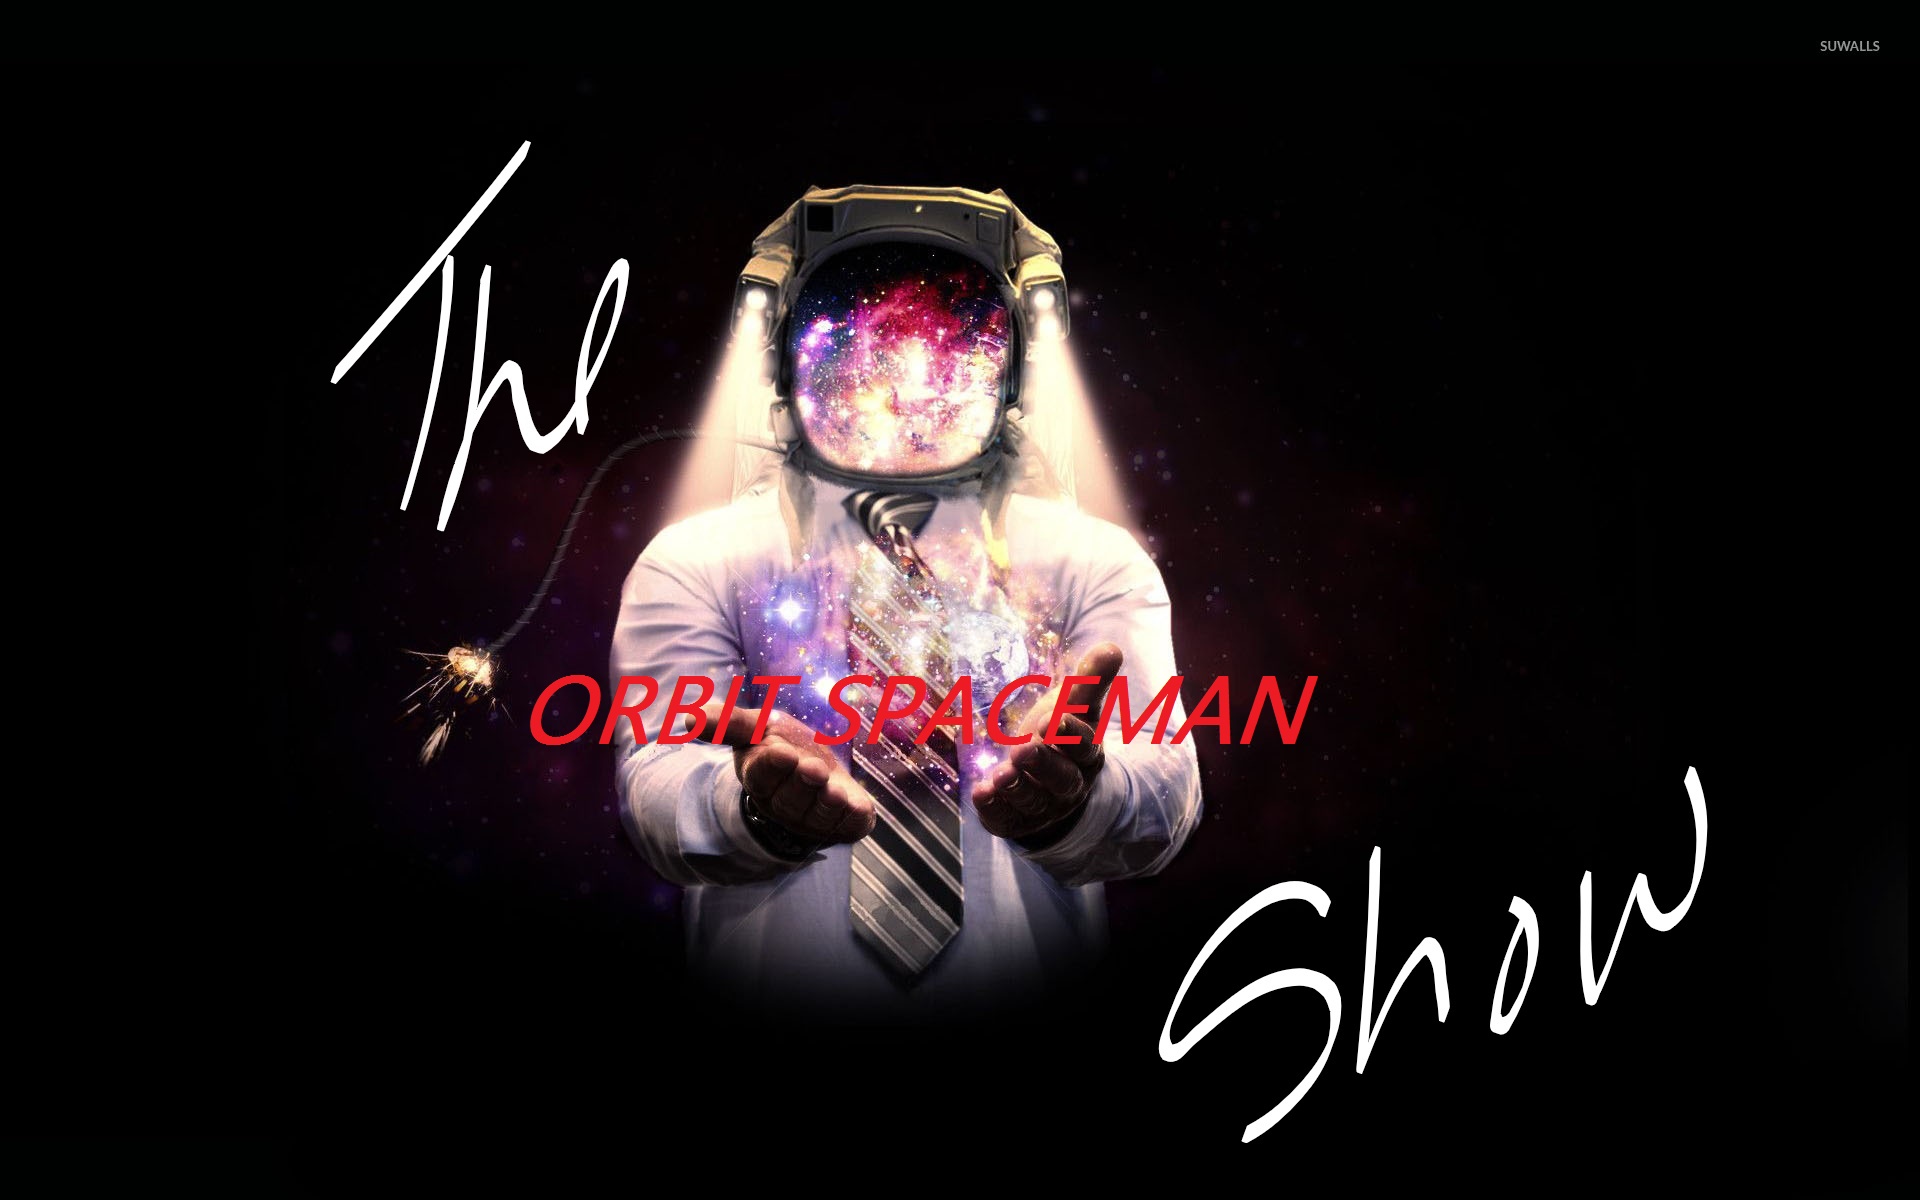 The Orbit Spaceman Show